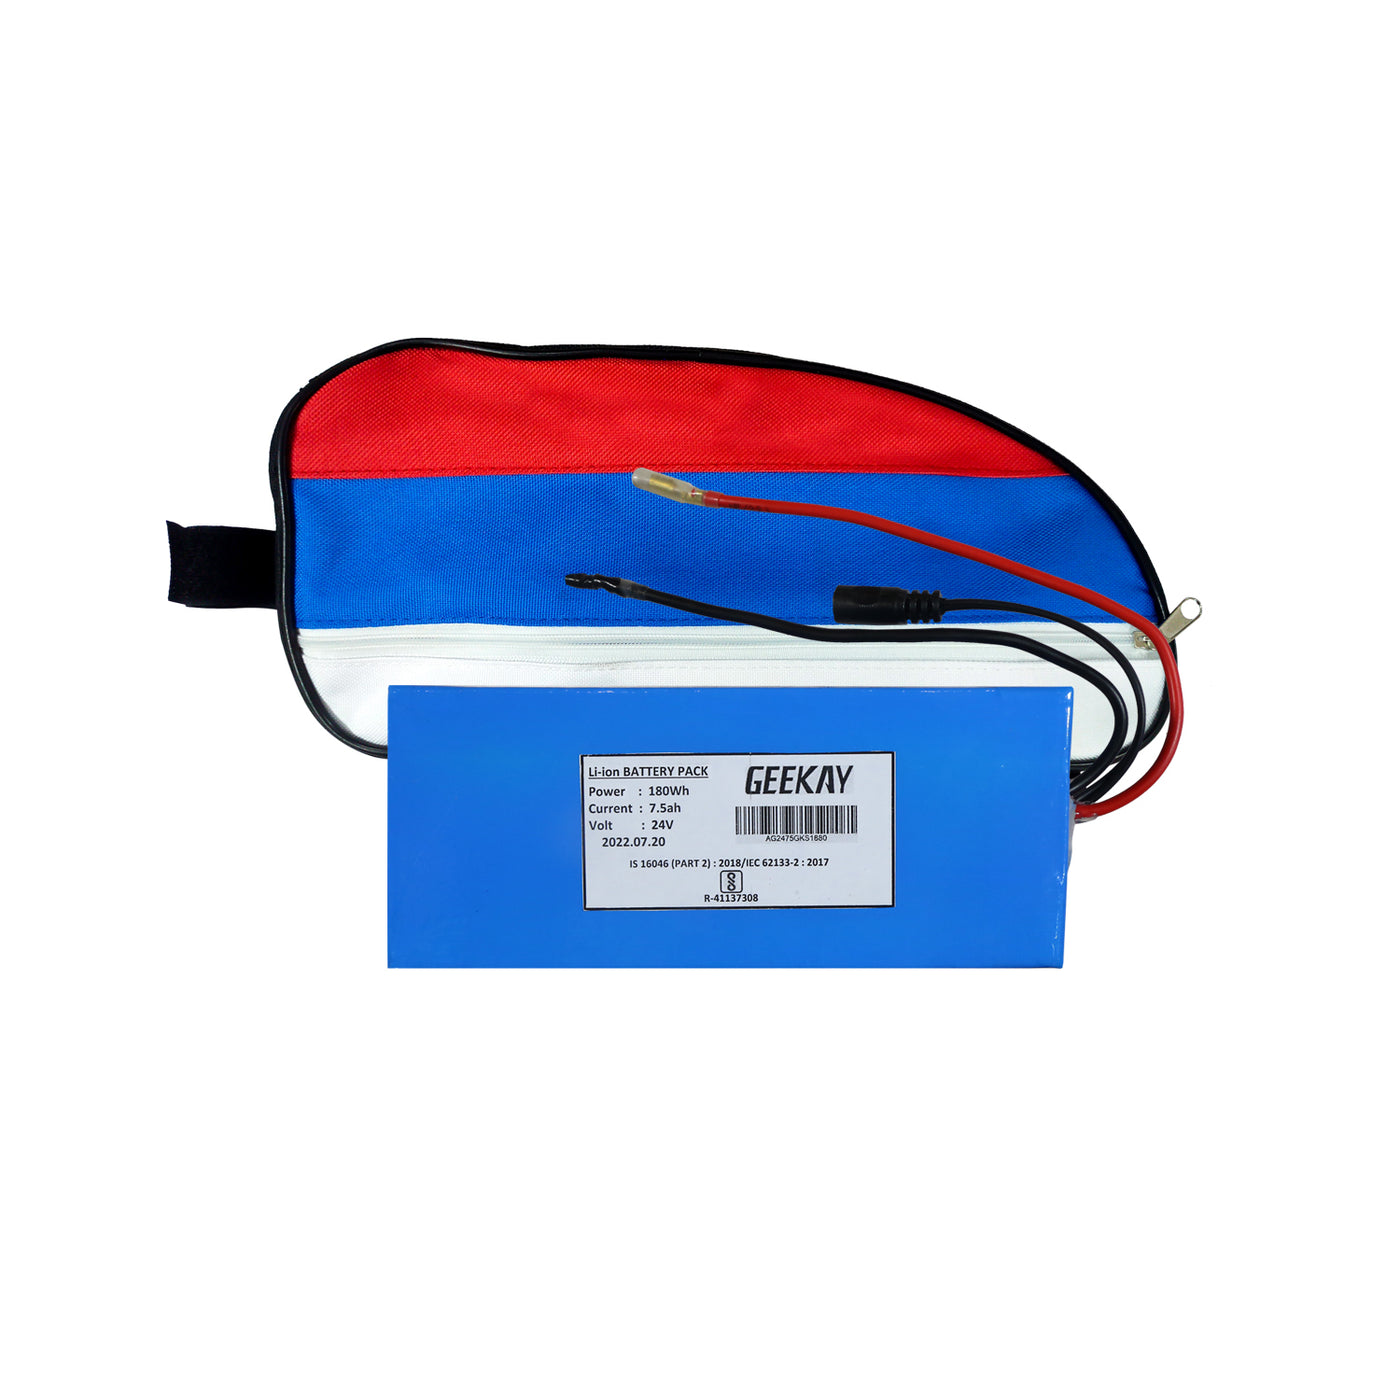 24V Li-ion Battery for Geekay PMDC Side Motor Kit Li-ion 7.5AH Battery 